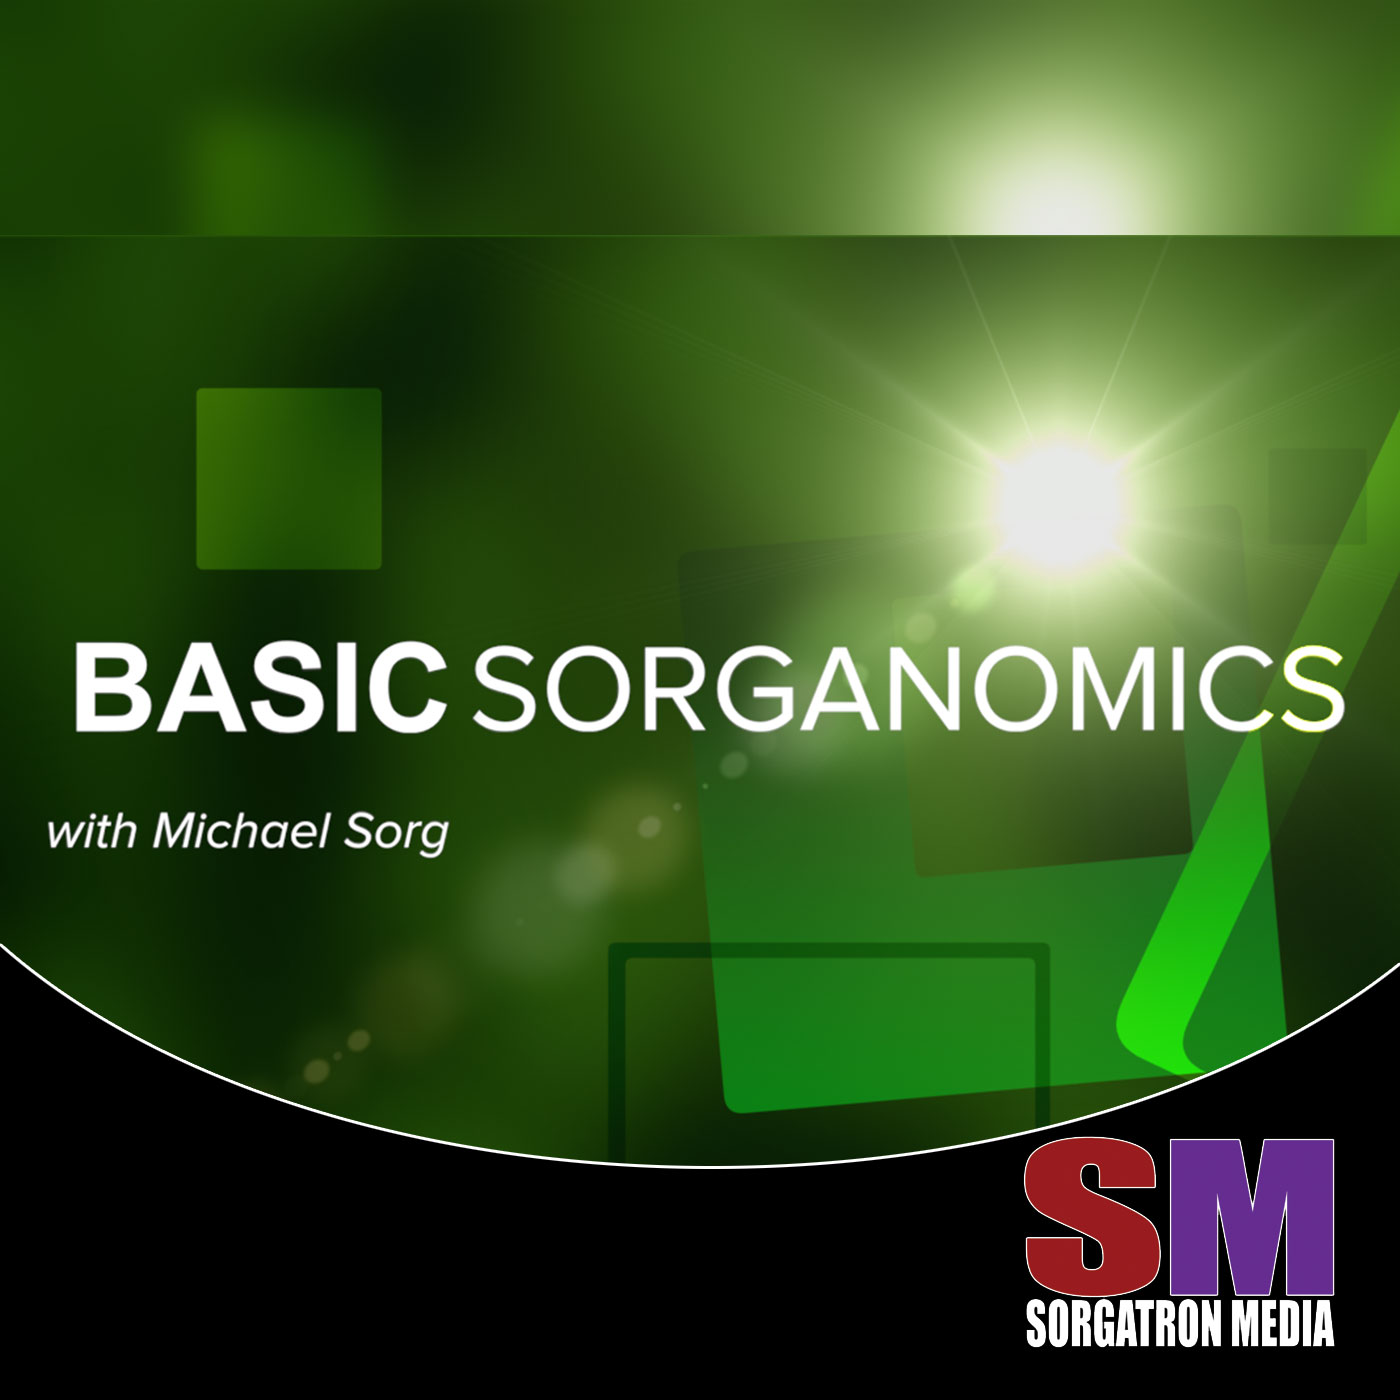 Basic Sorganomics: Why Are You Making?